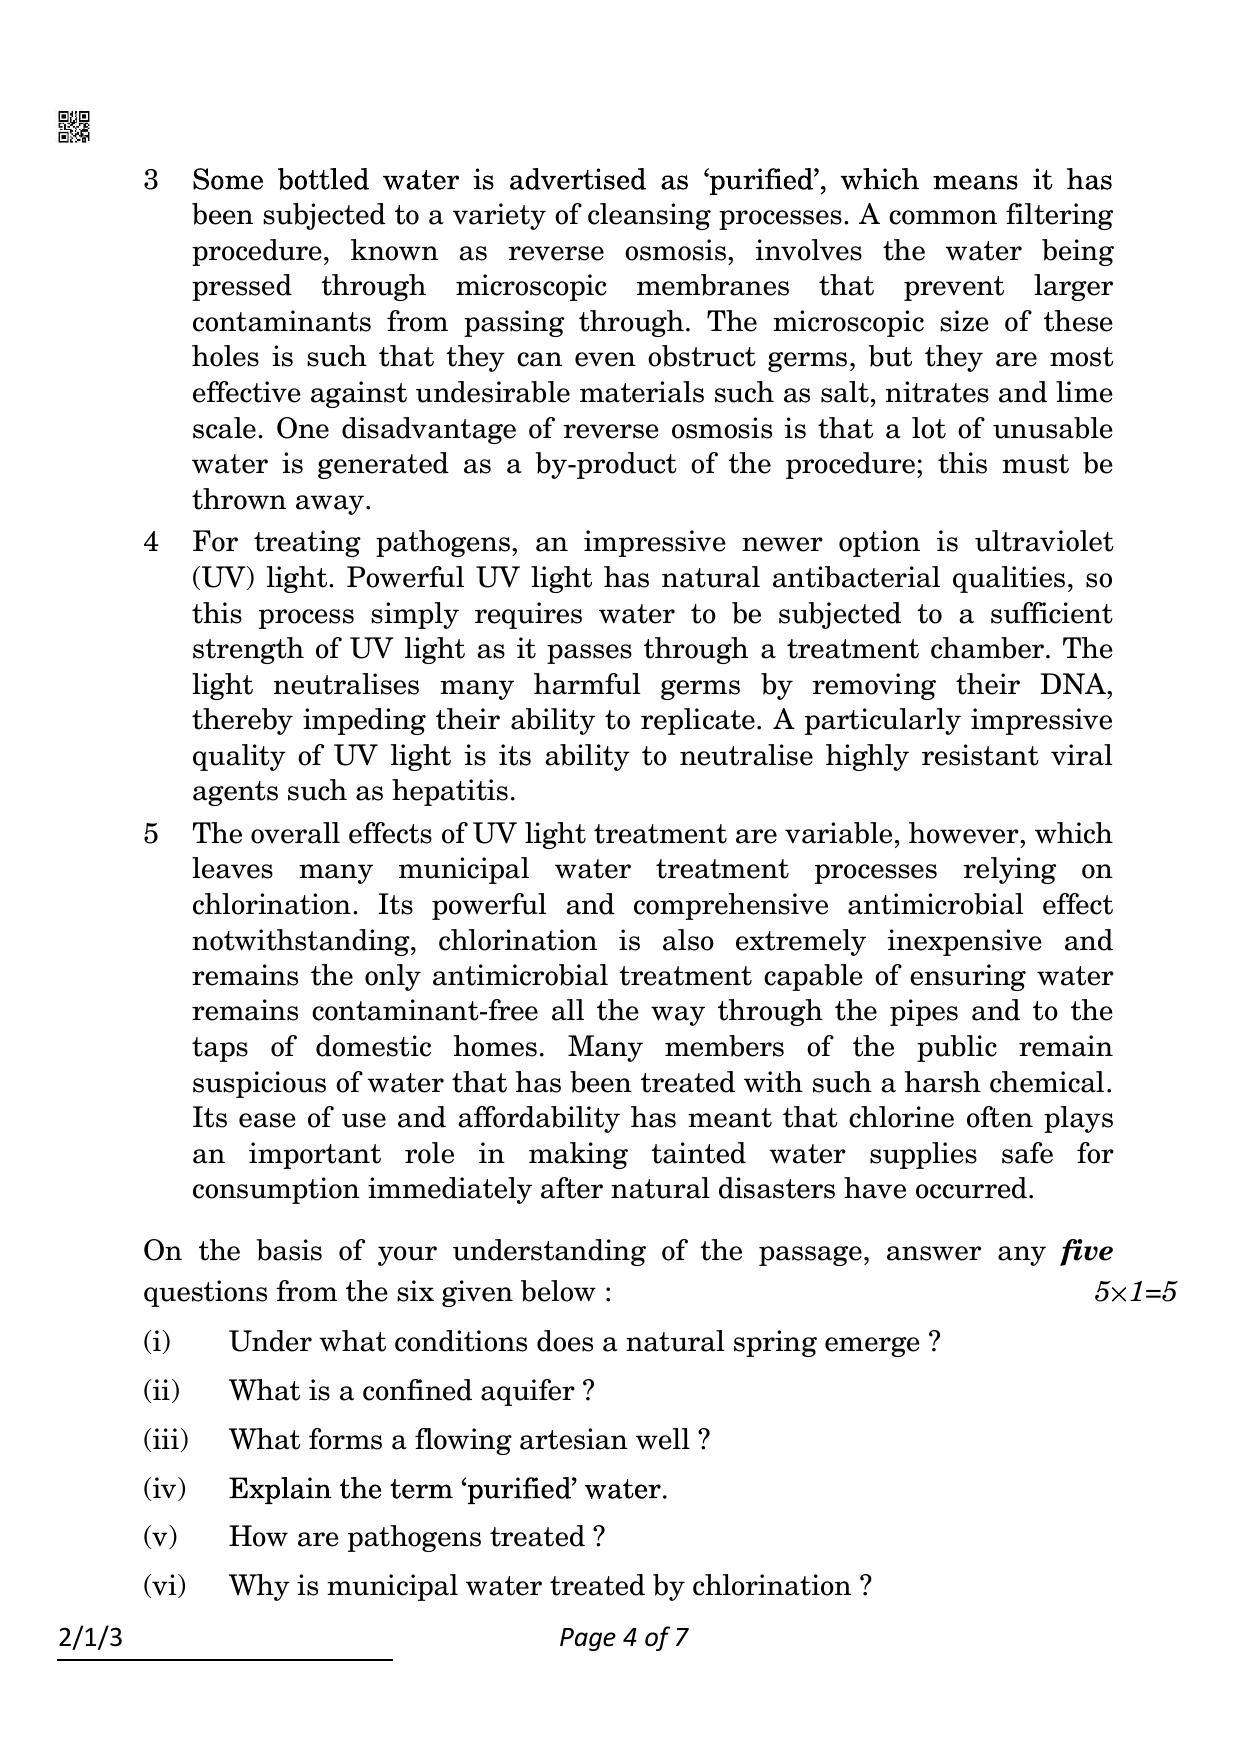 CBSE Class 10 2-1-3 English L & L 2022 Question Paper - Page 4